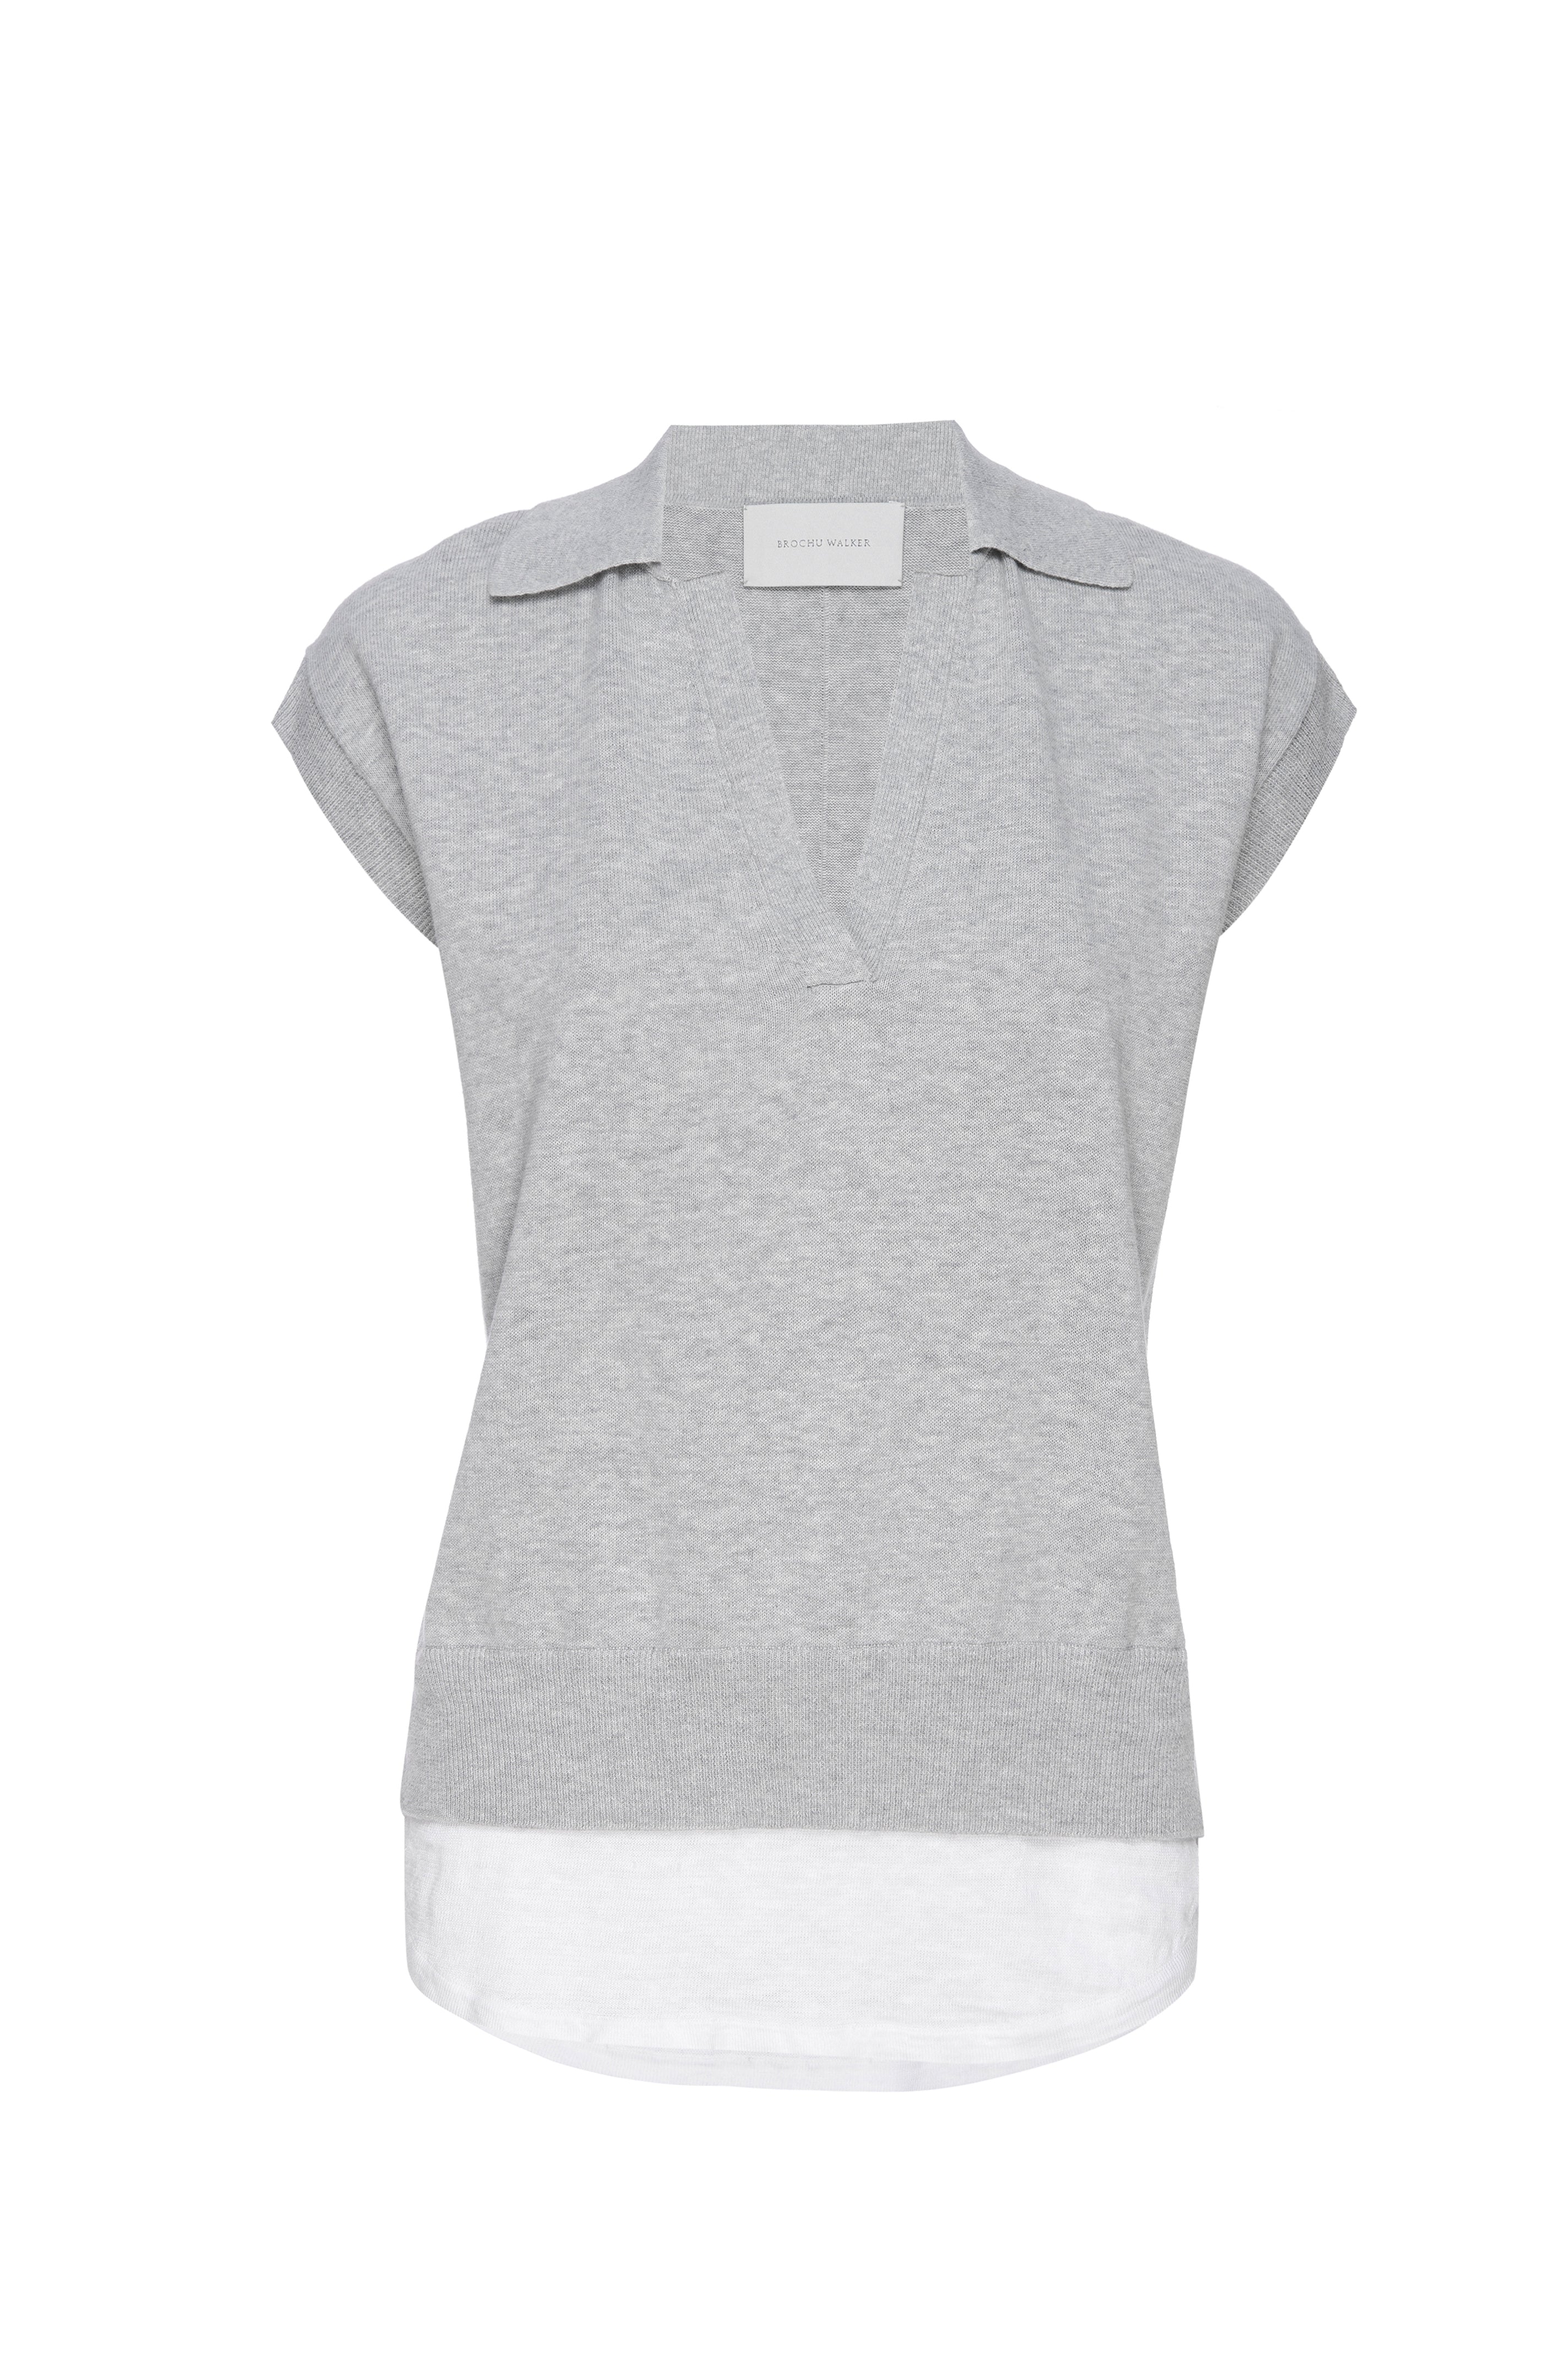 Jaia layered polo short sleeve grey sweater flat view